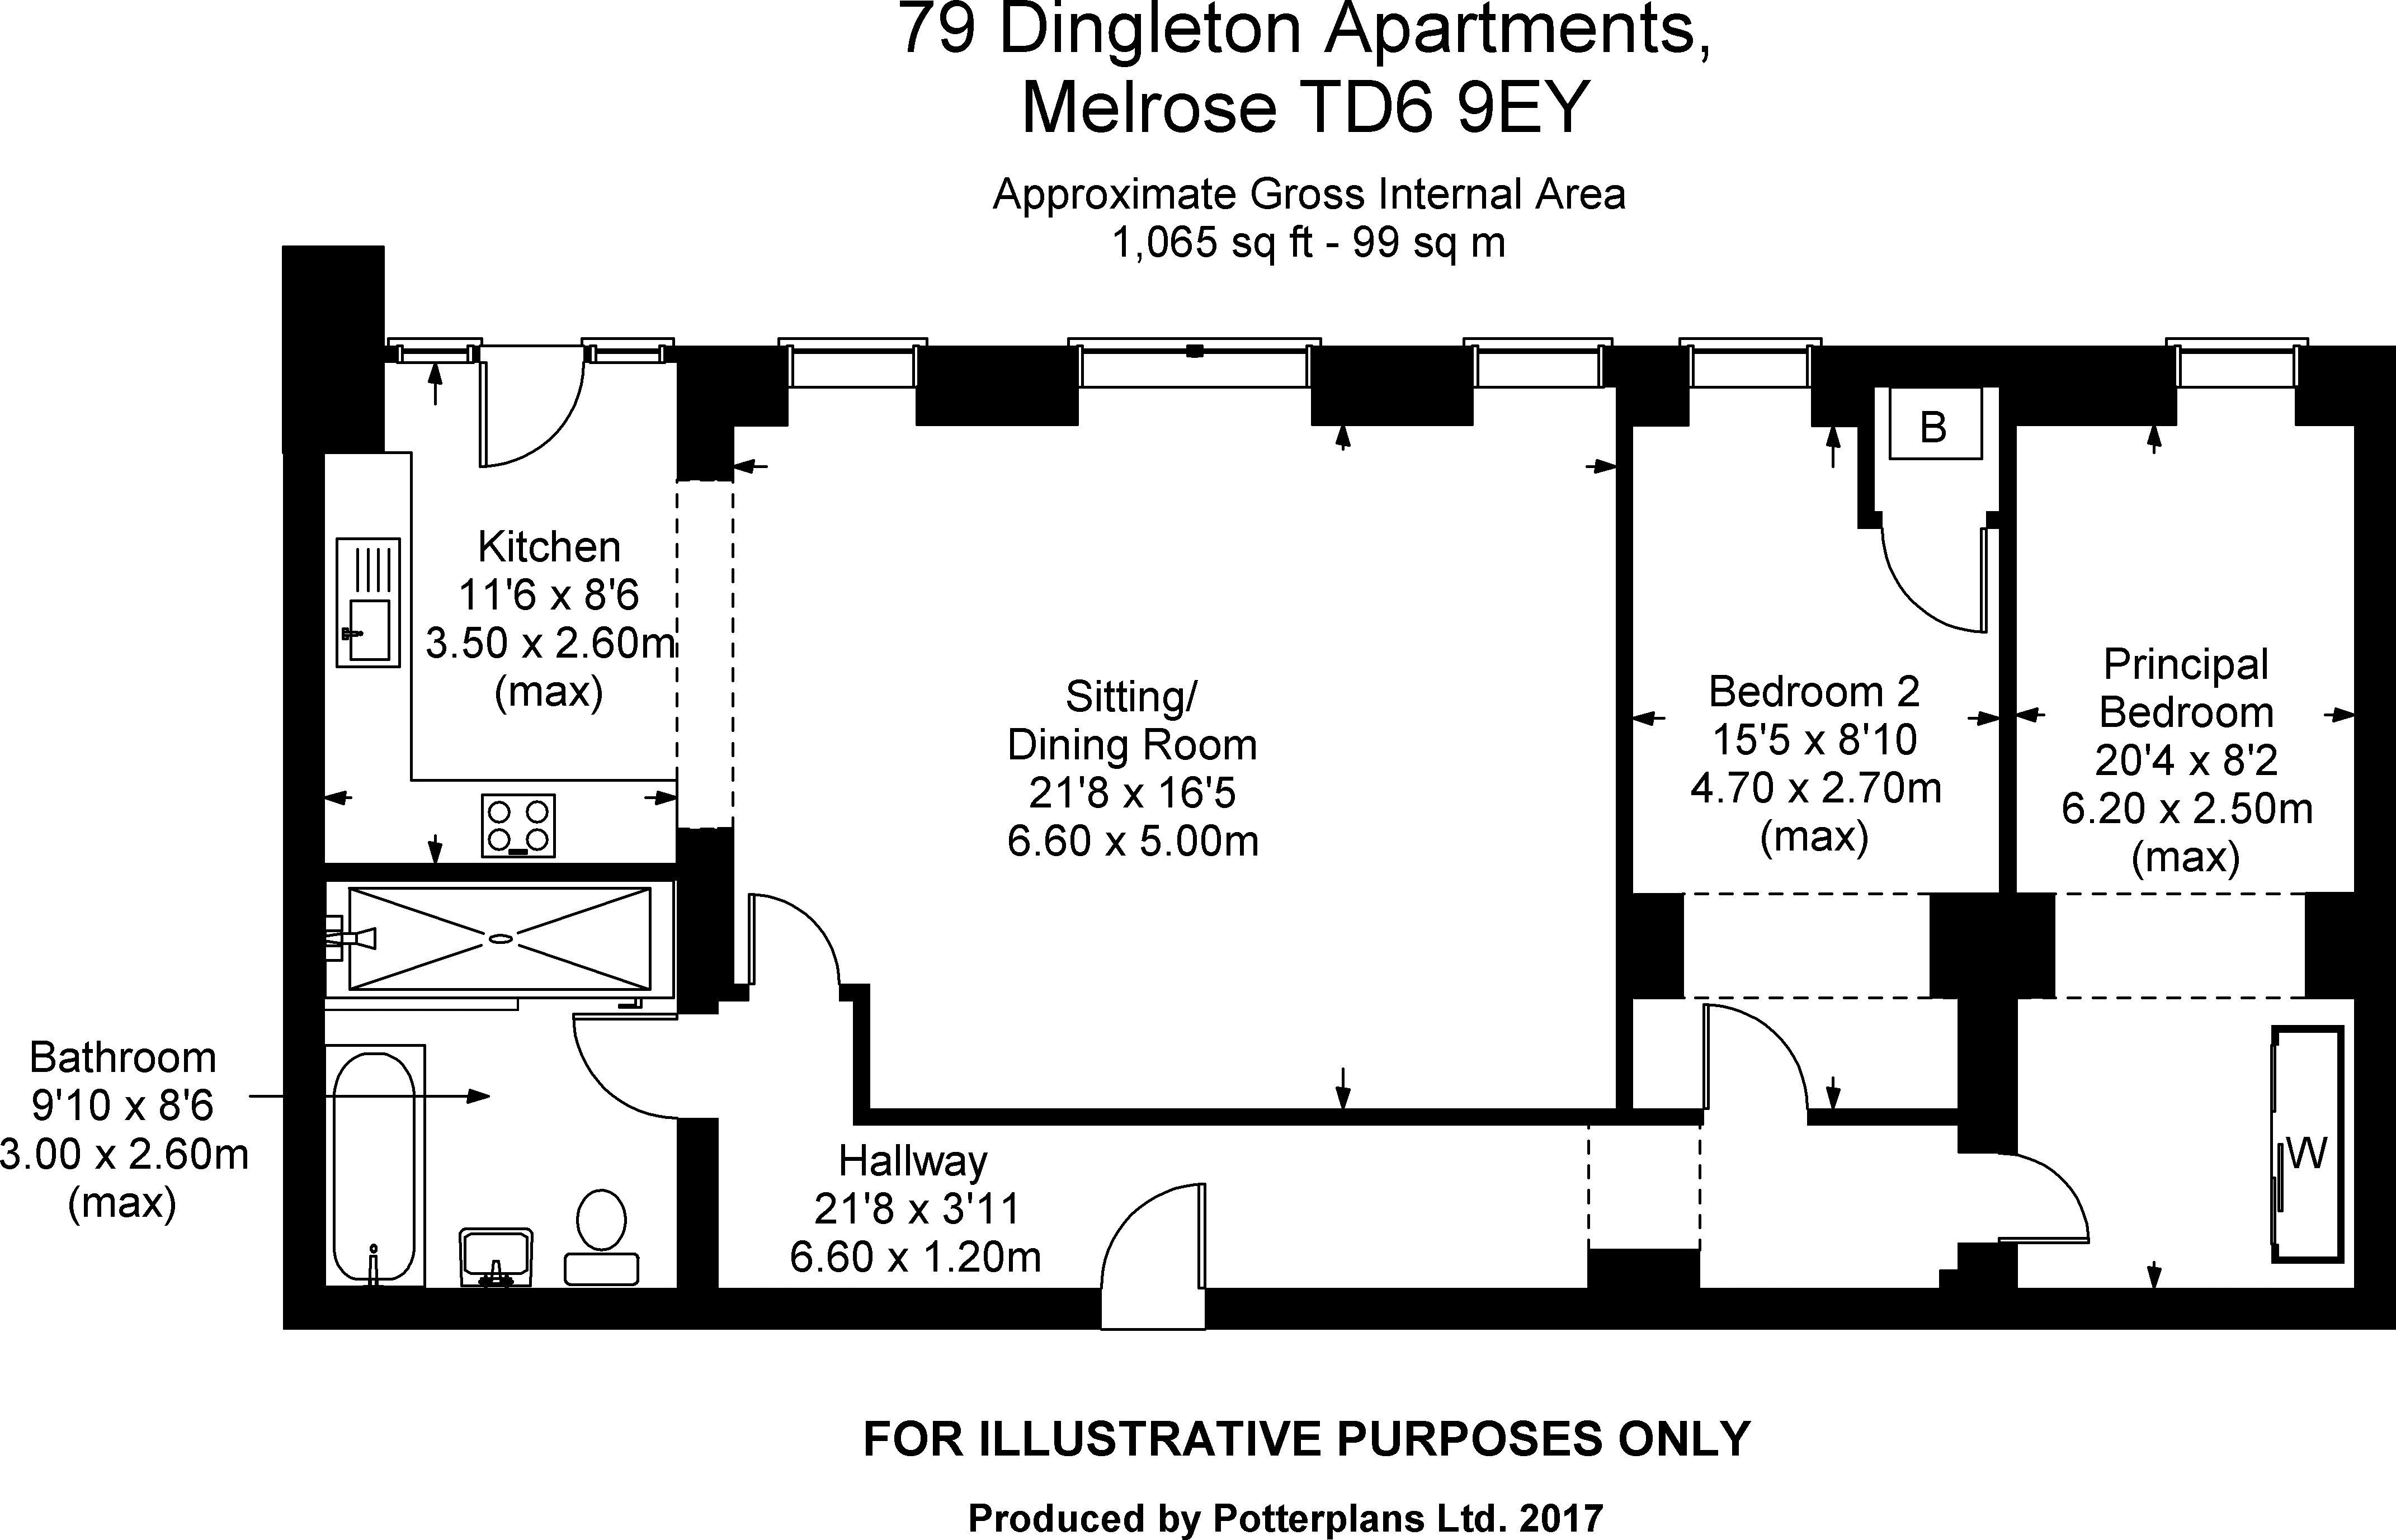 79 Dingleton Apartments Floorplan